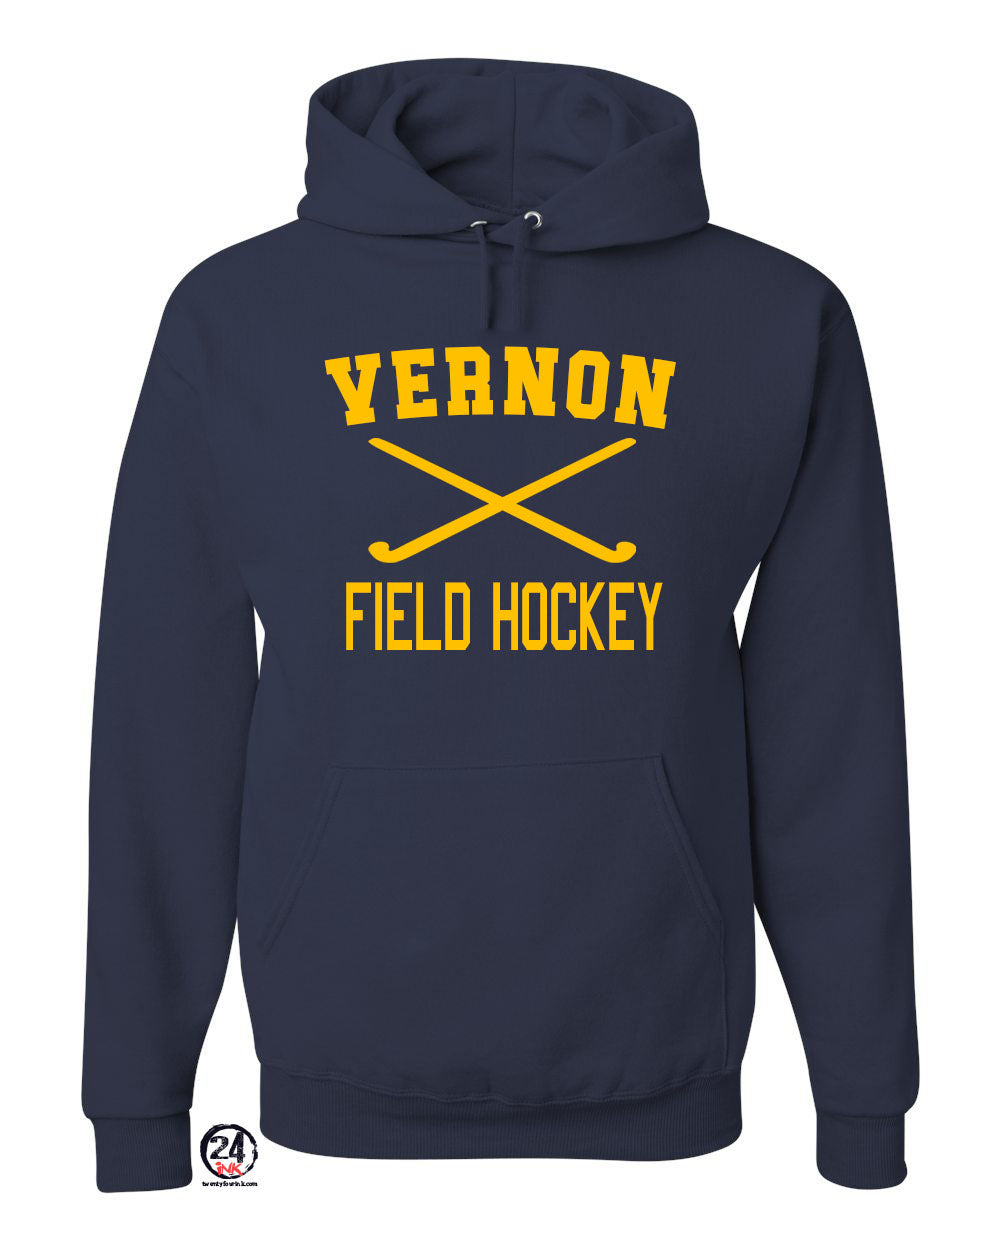 Vernon Field Hockey Design 1 Hooded Sweatshirt